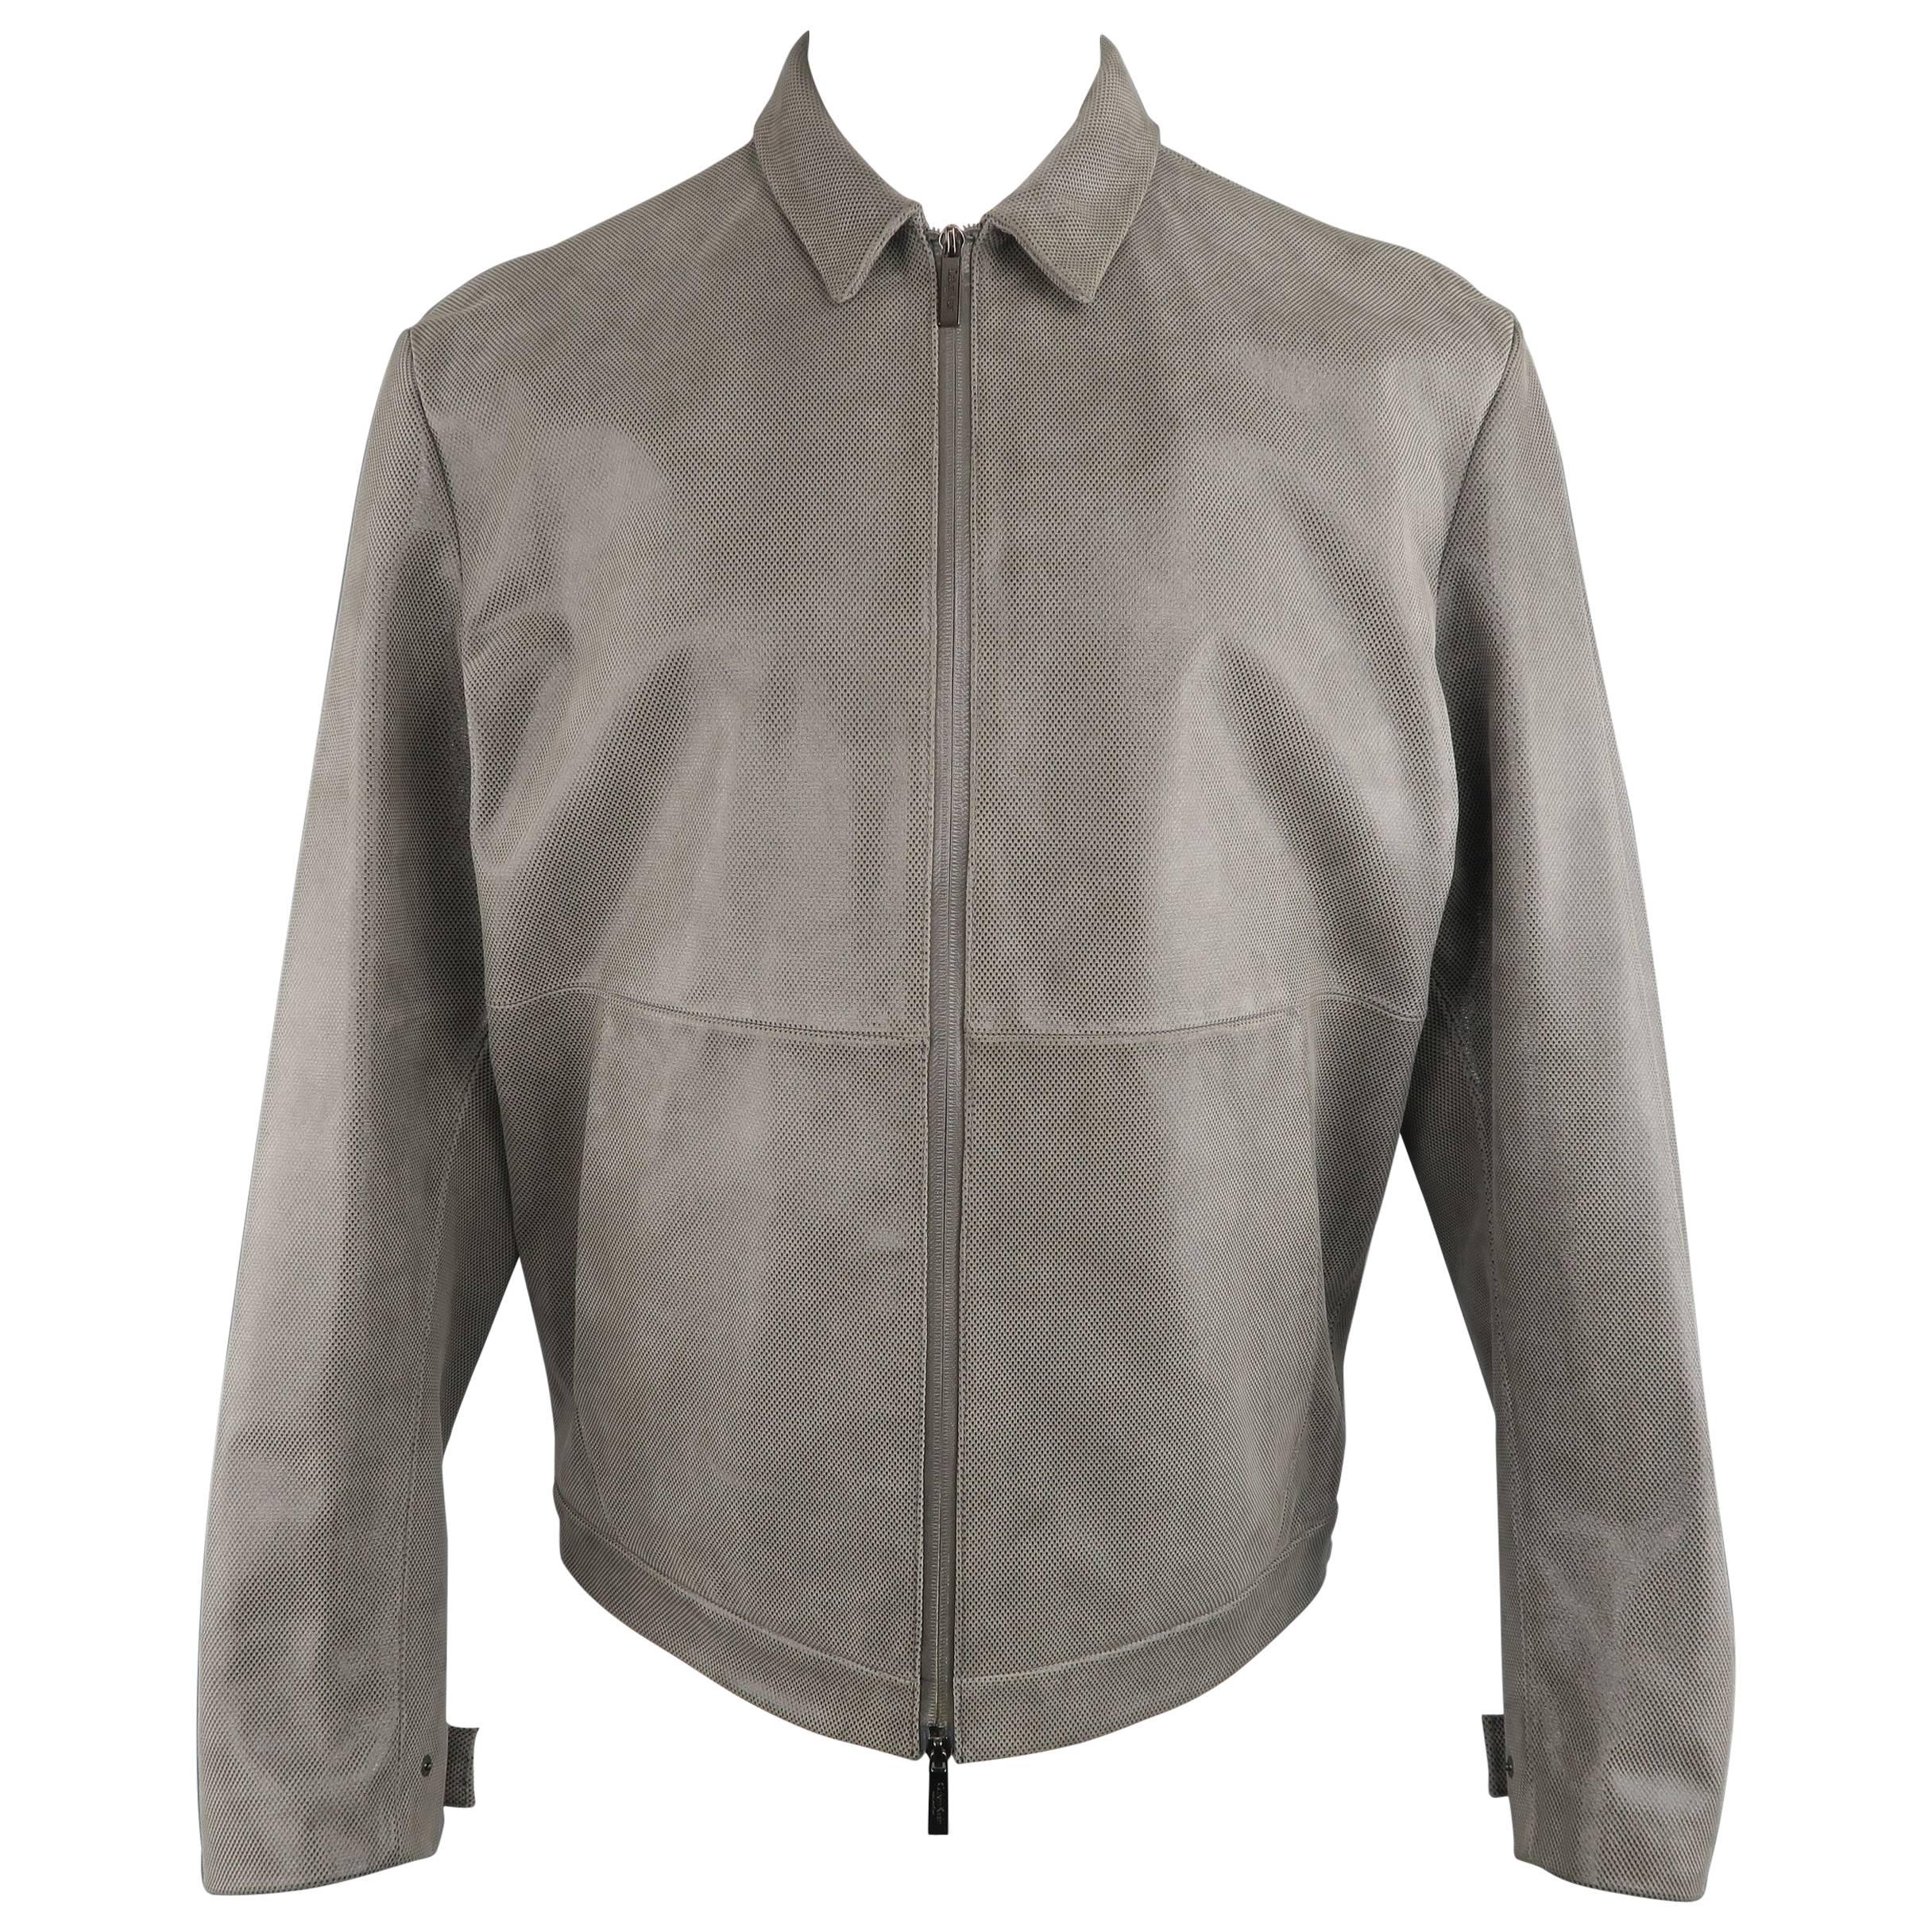 Calvin Klein Collection Jacket Grey and Black Metallic Leather Jacket  